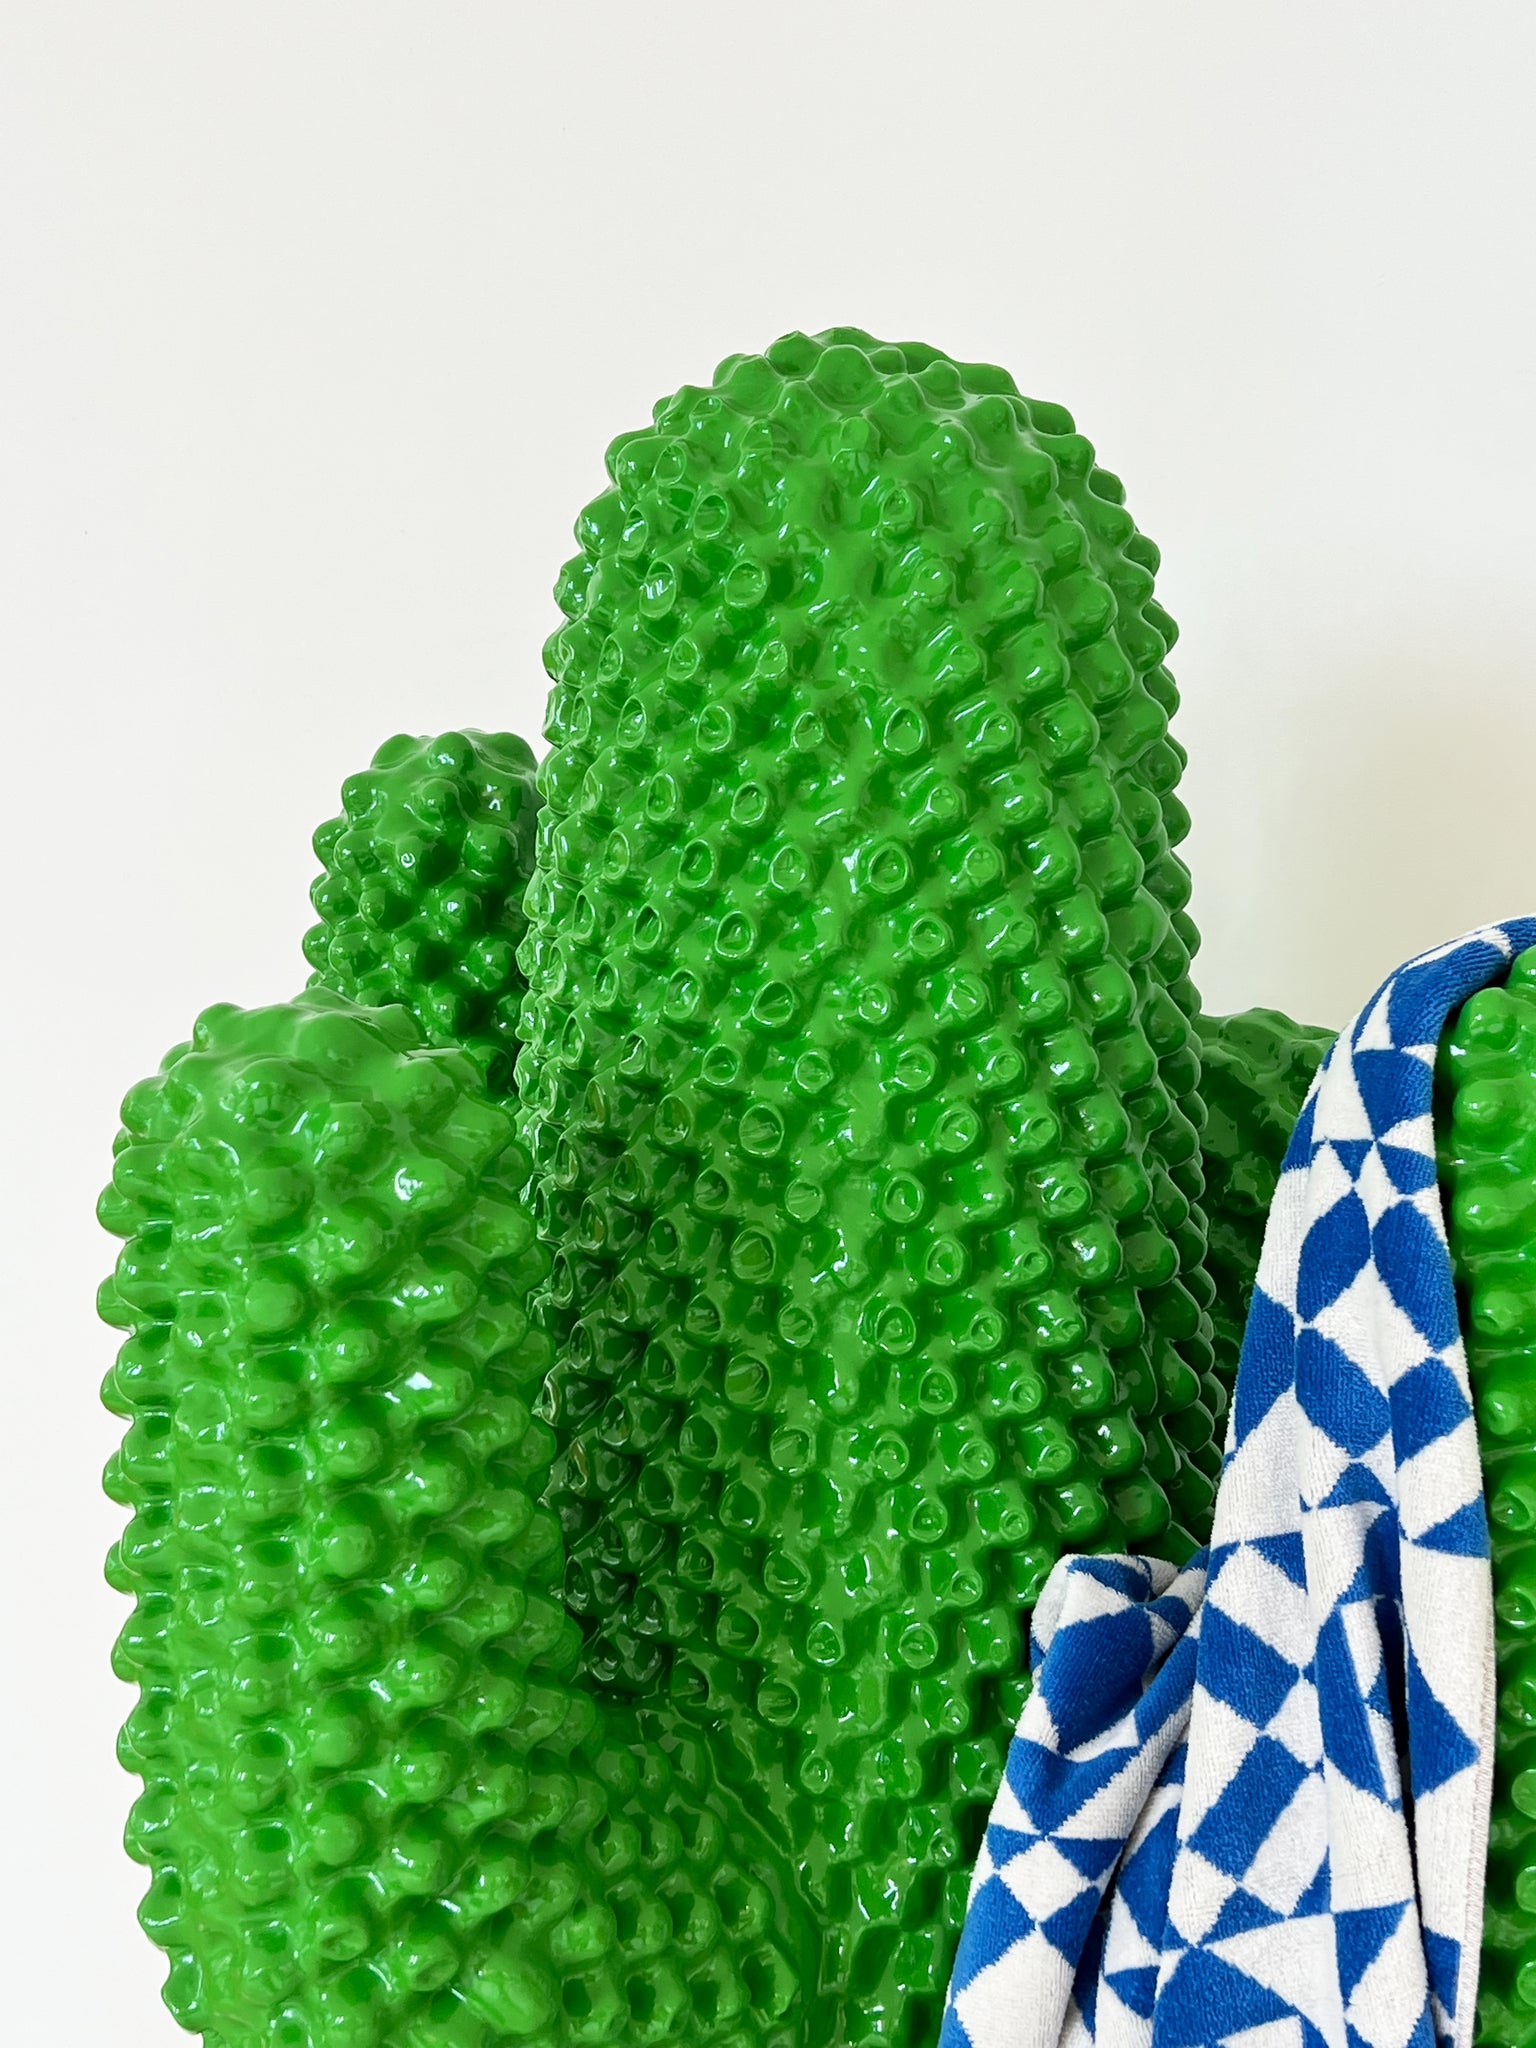 Gufram Italian Another Green Cactus Coat Stand